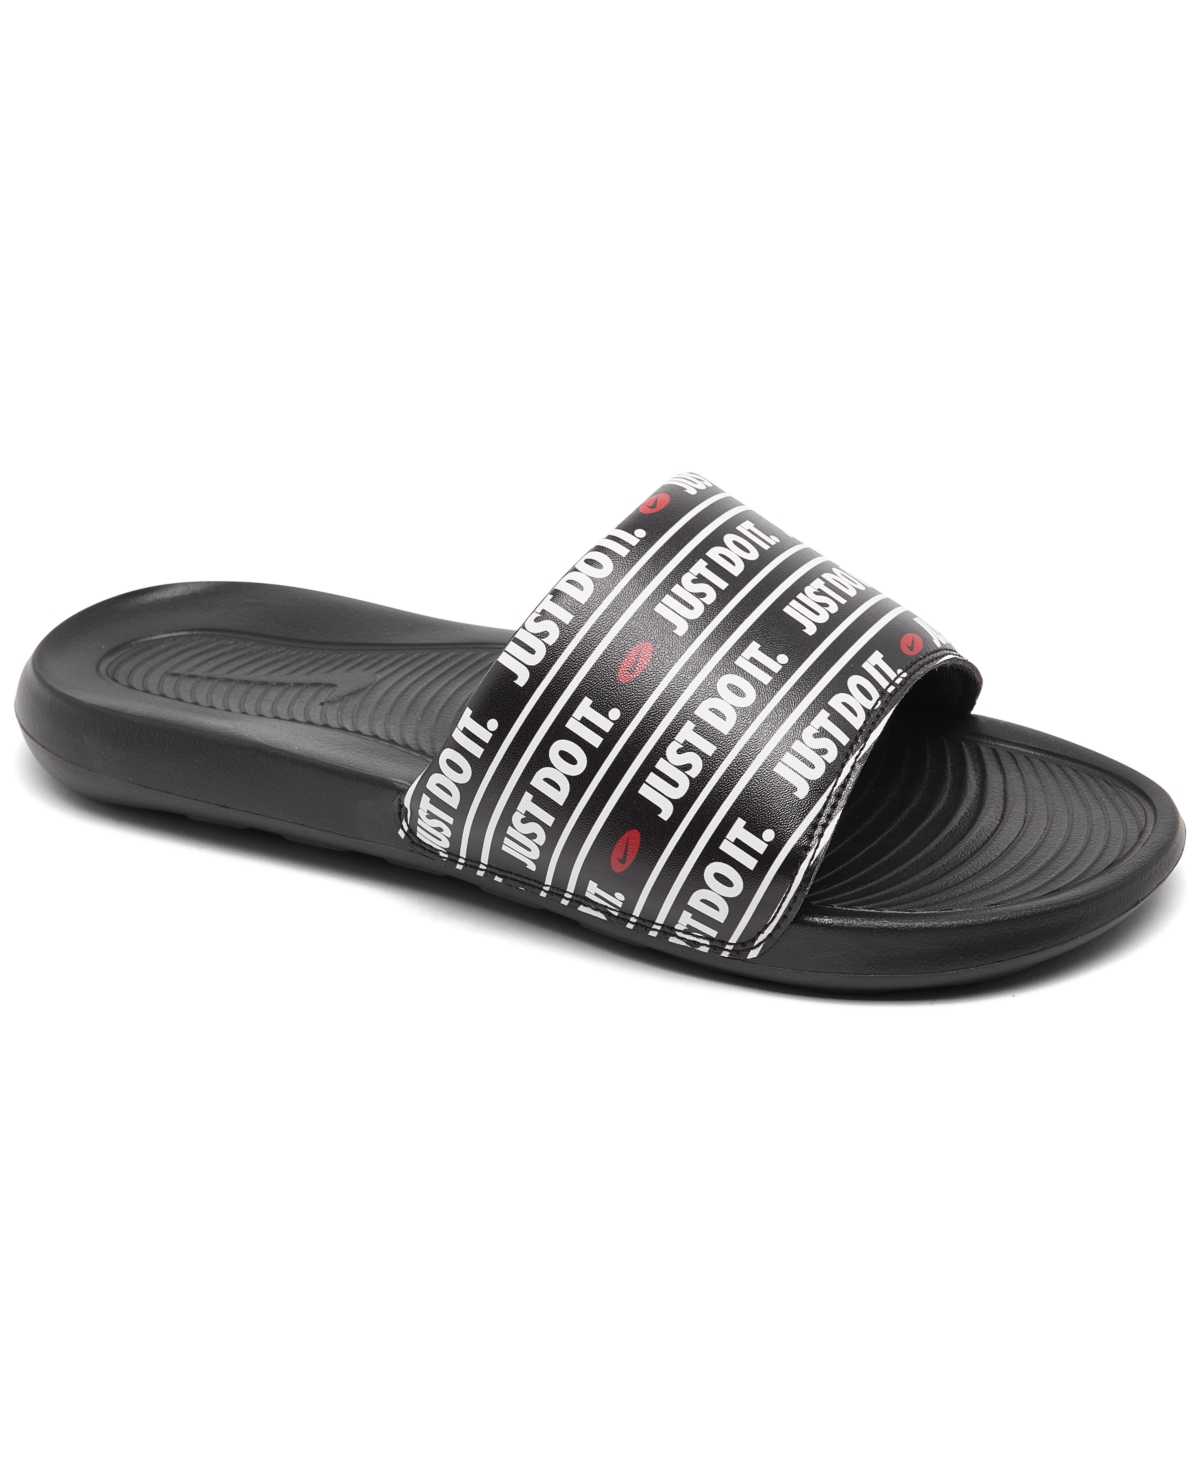 Men's Victori One All-Over Print Slide Sandals from Finish Line - Black, University Red